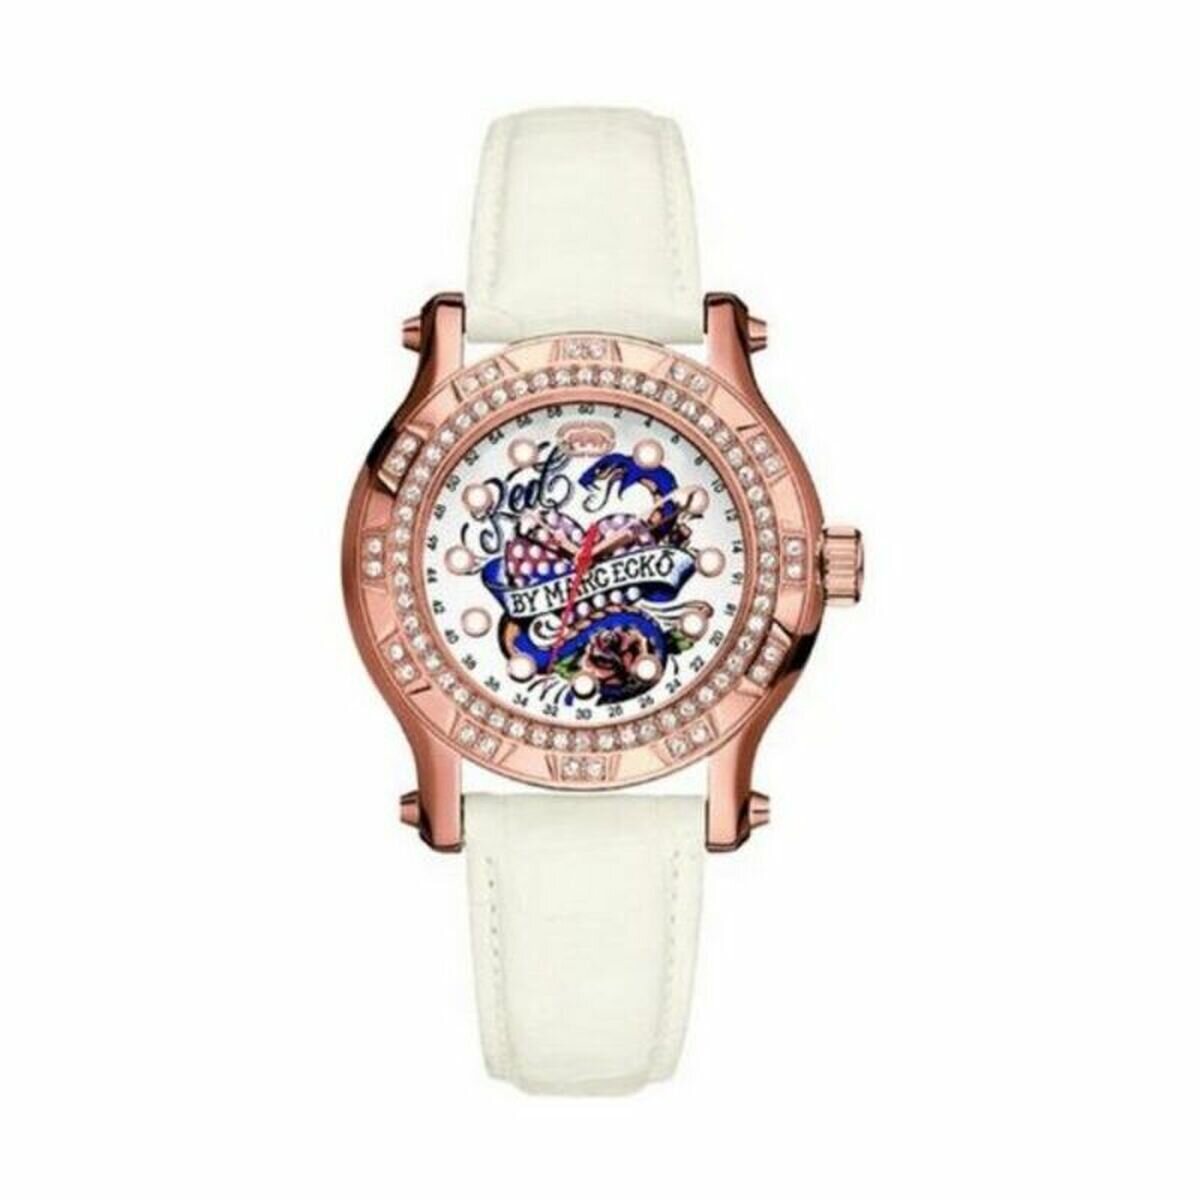 Ladies Marc Ecko Rose gold watch